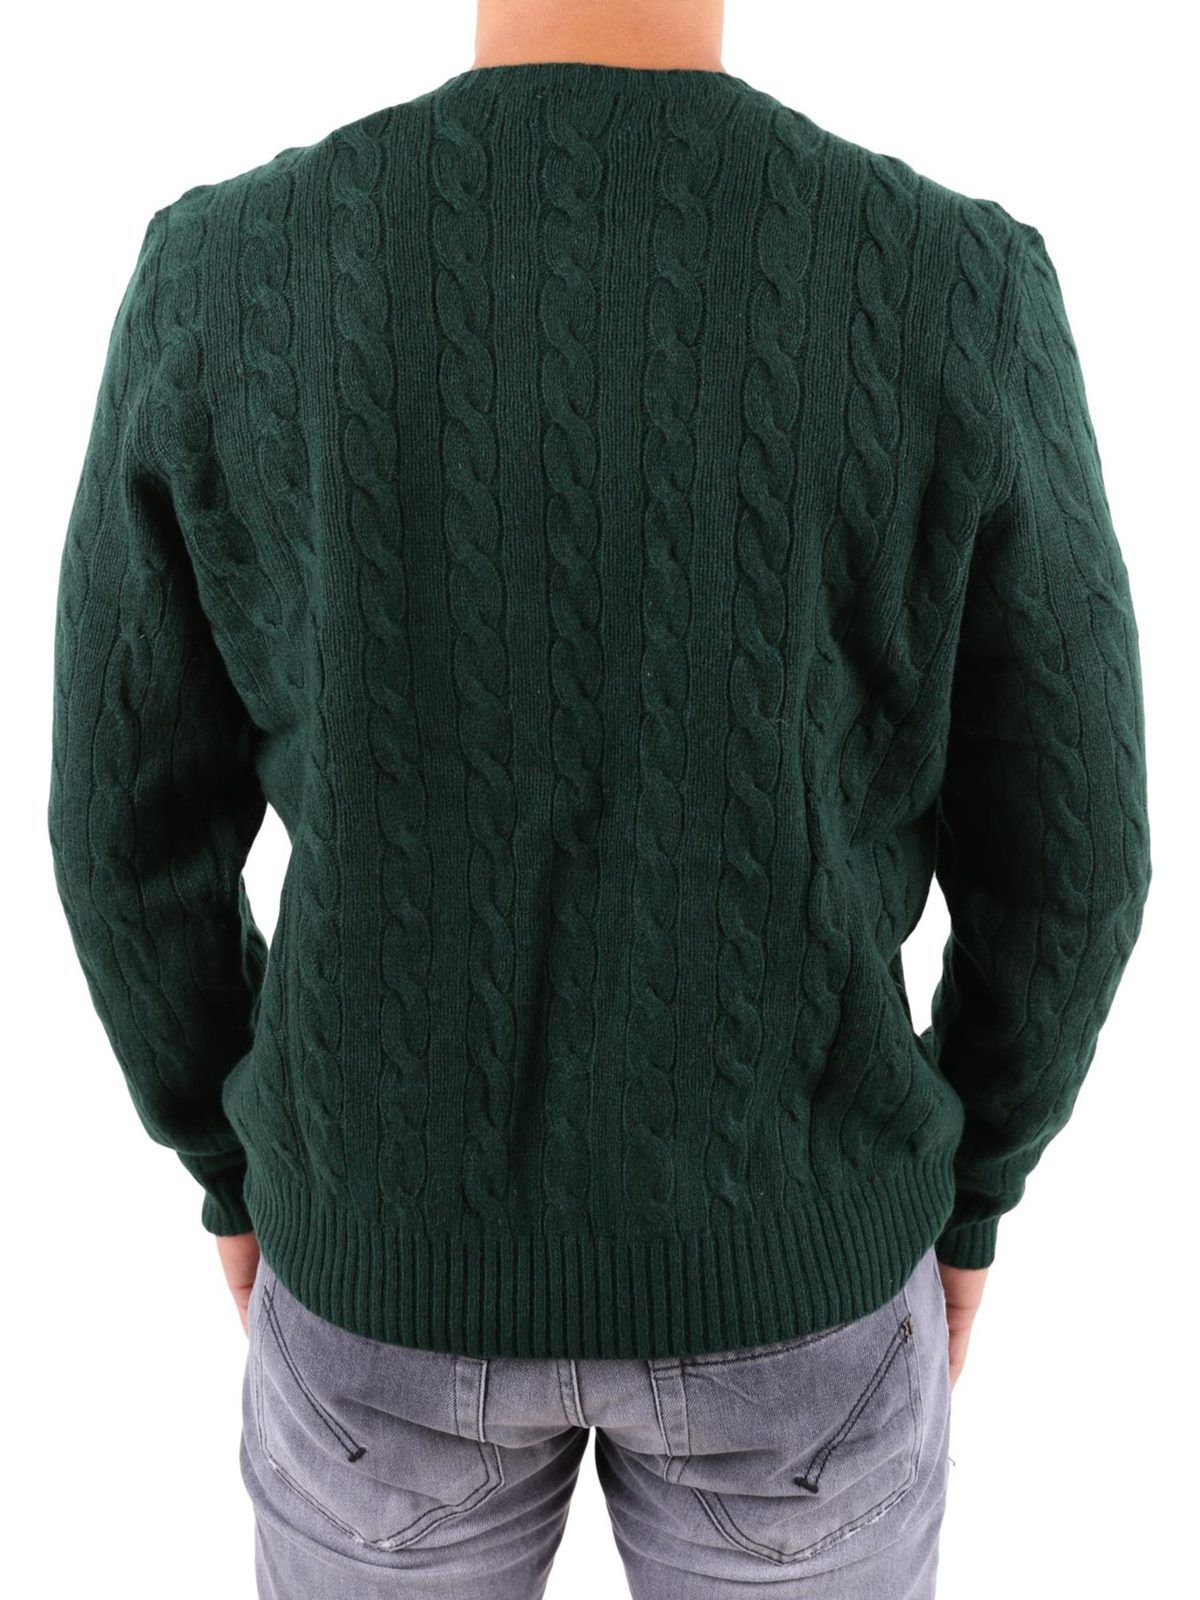 polo ralph lauren cashmere sweater